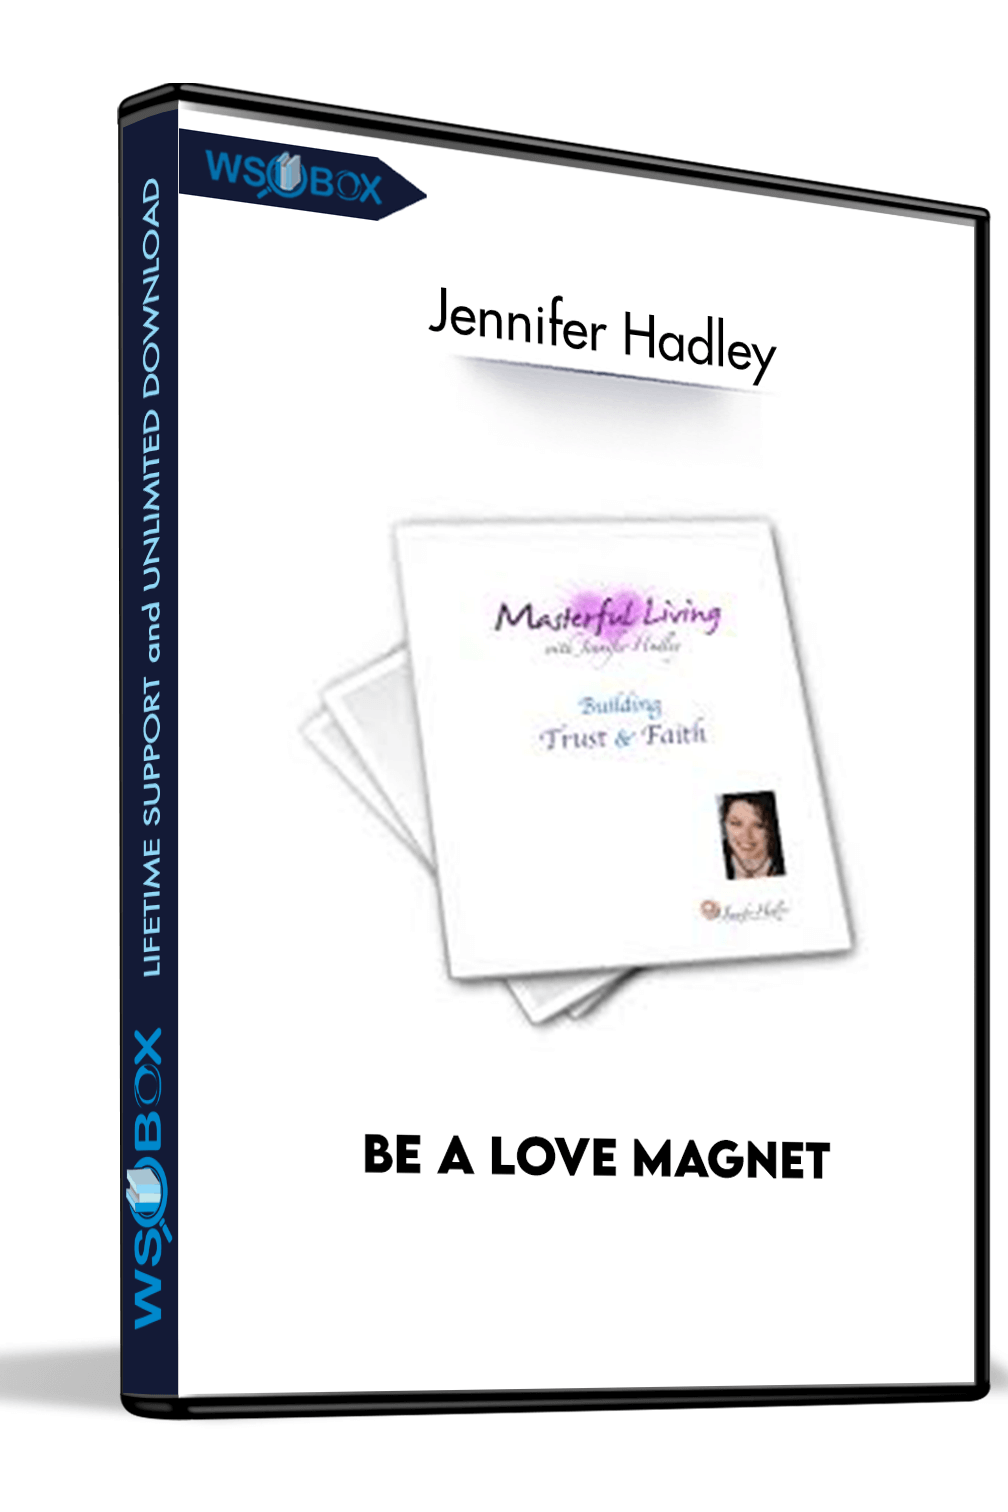 Be a love magnet – Jennifer Hadley